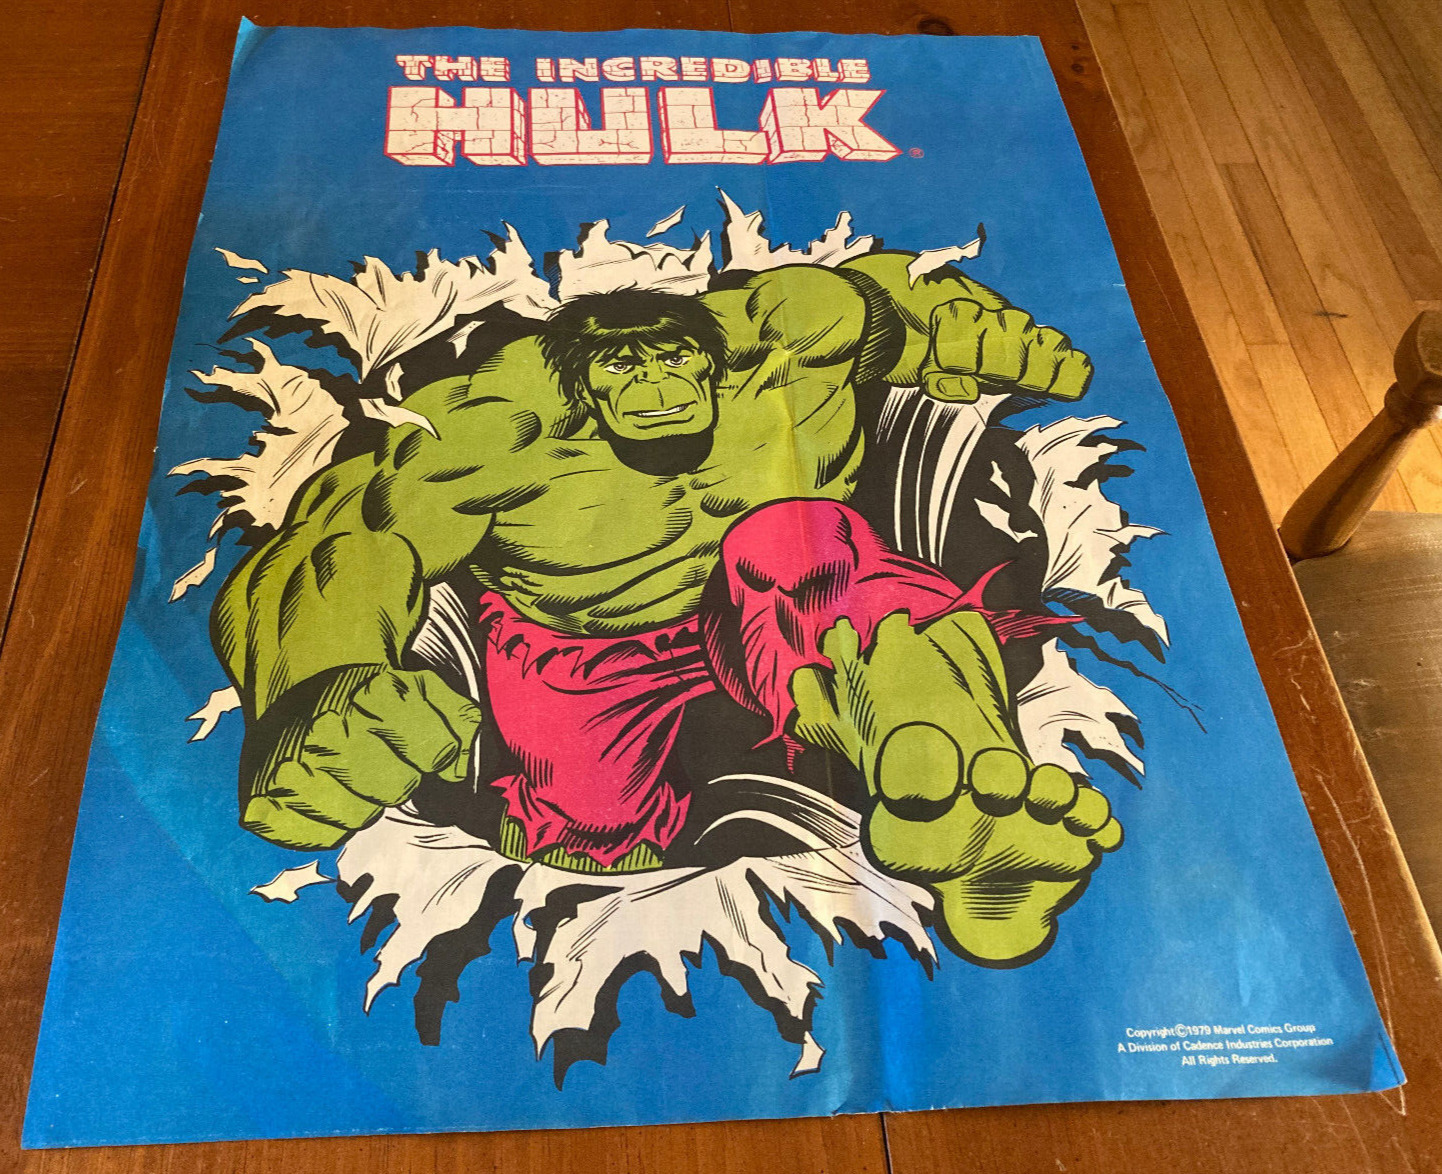 Vintage 1979 The Incredible Hulk Poster from Marvel Cadence Enterprise 17